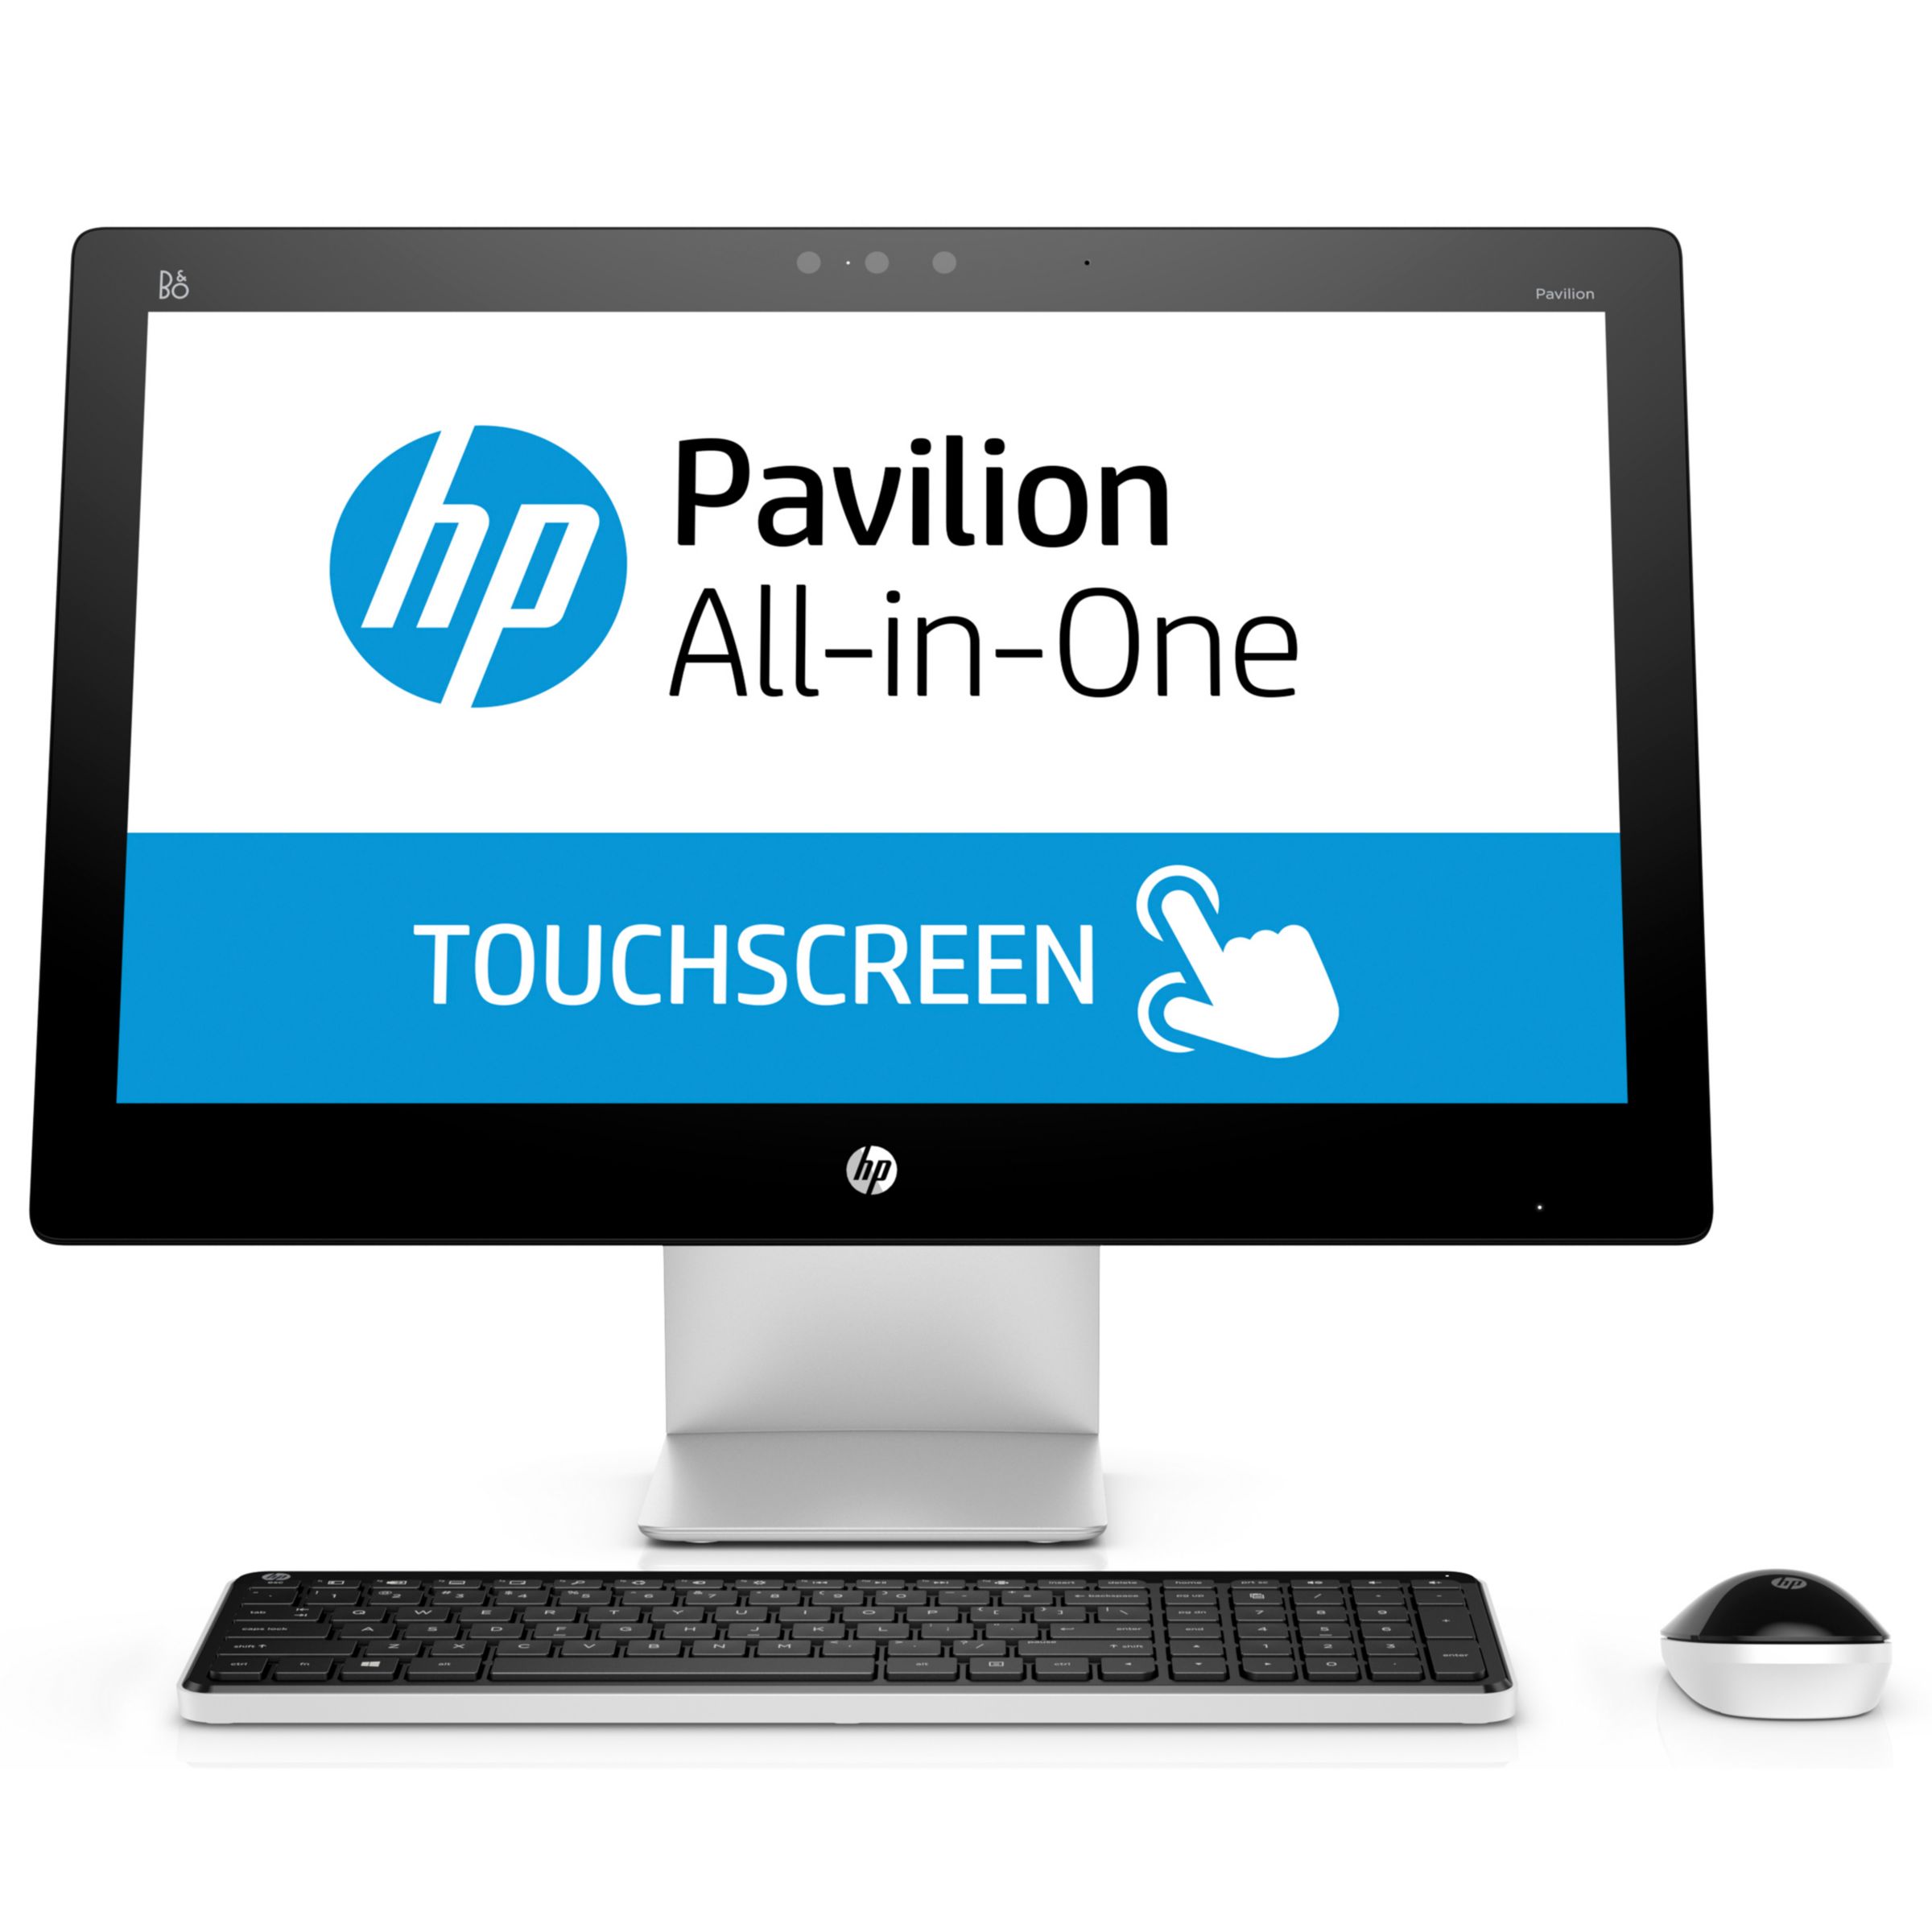 HP Pavilion 23-q255na All-in-One Desktop PC, Intel Core i5, 8GB RAM, 2TB, 23" Full HD Touchscreen, Blizzard White